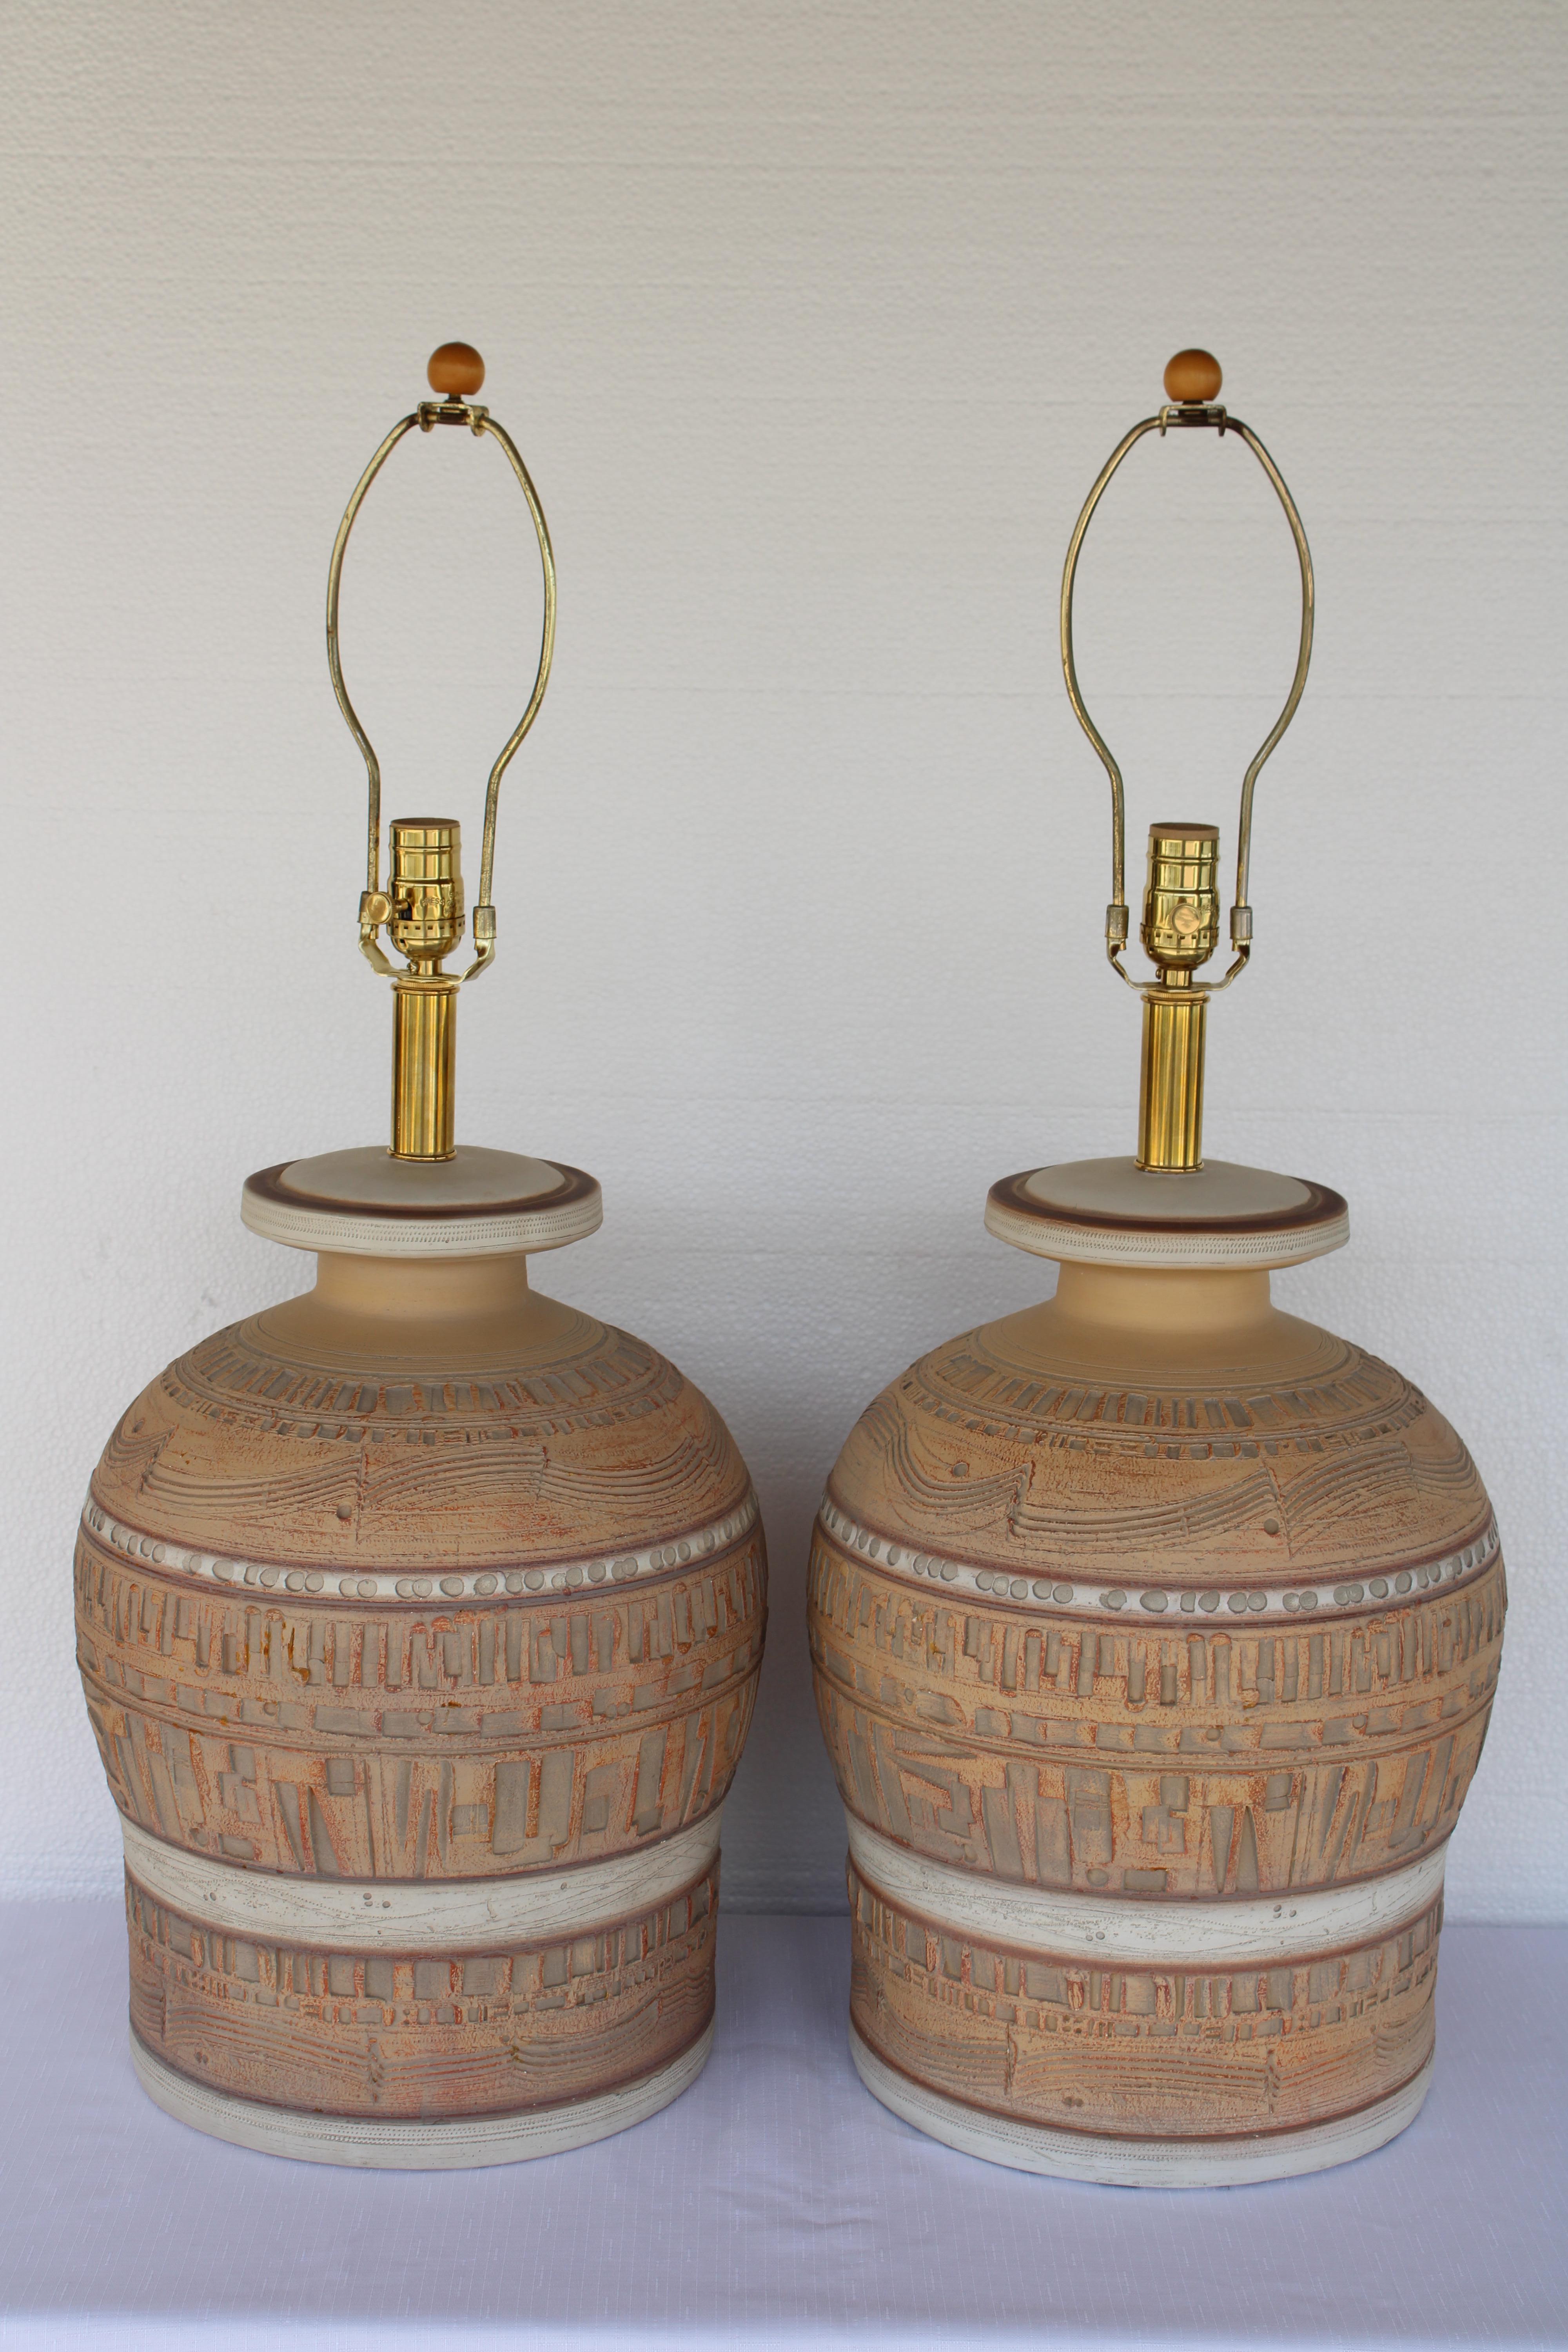 Pair of ceramic table lamps by Casual Lamps of California, 1979.  Lamps measure 20.5